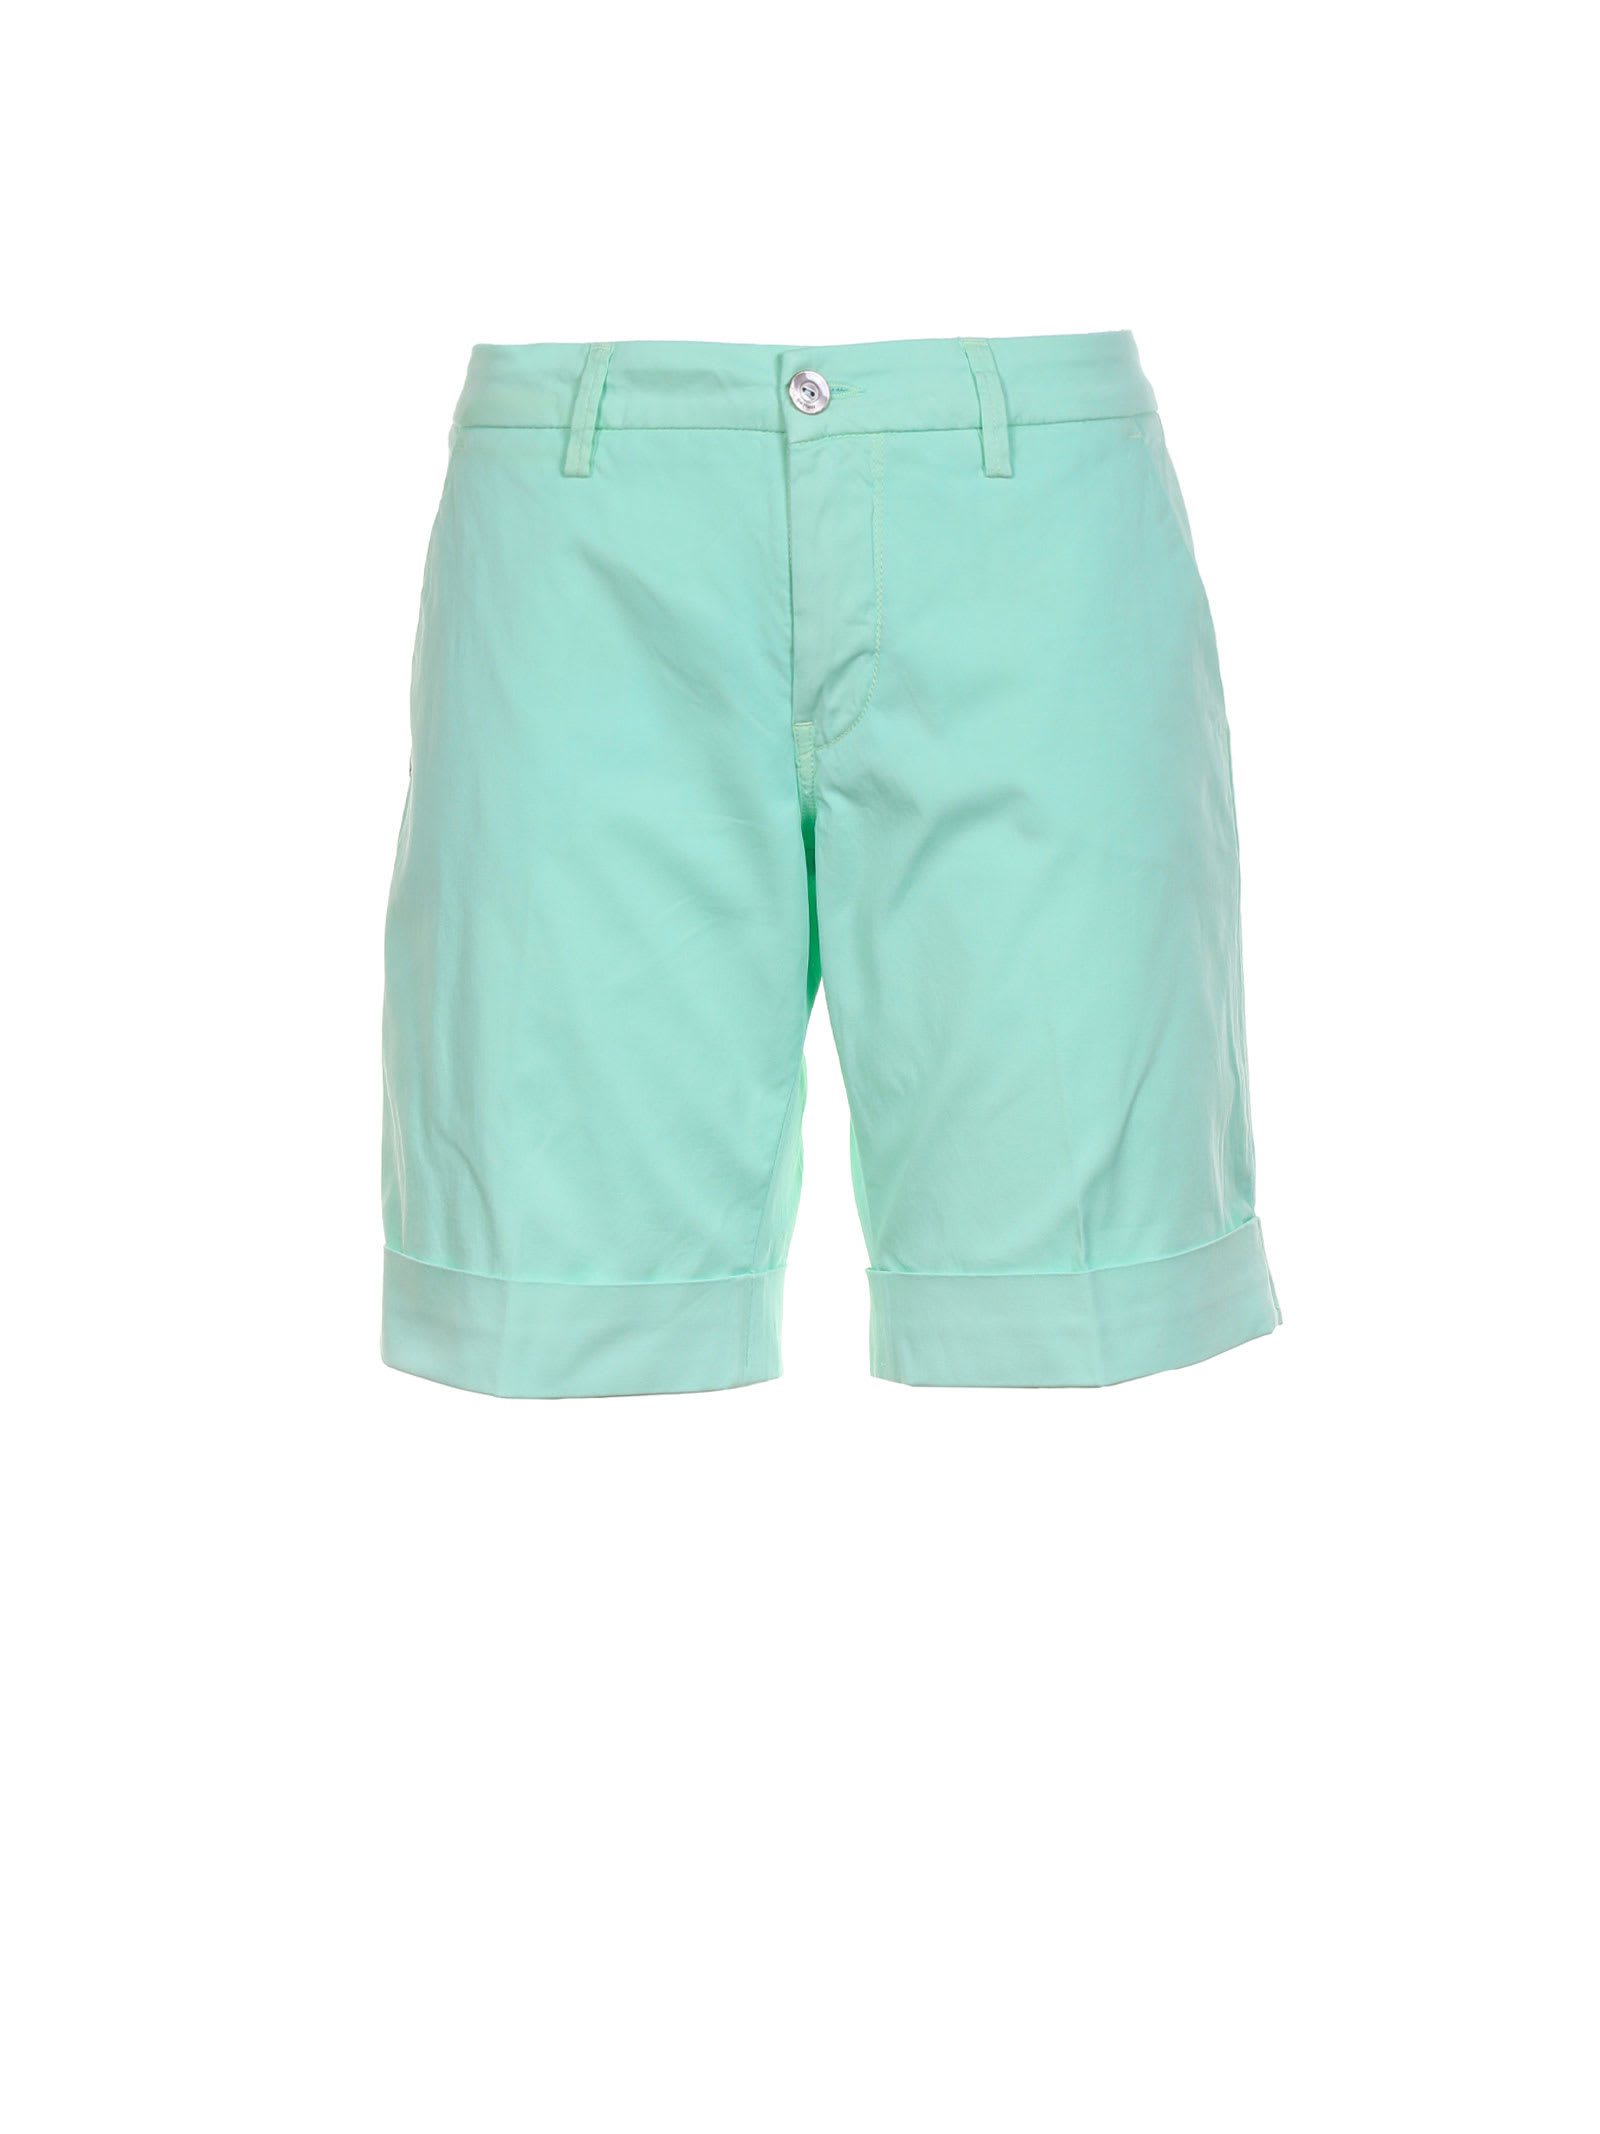 Re-HasH Bermuda Shorts Green